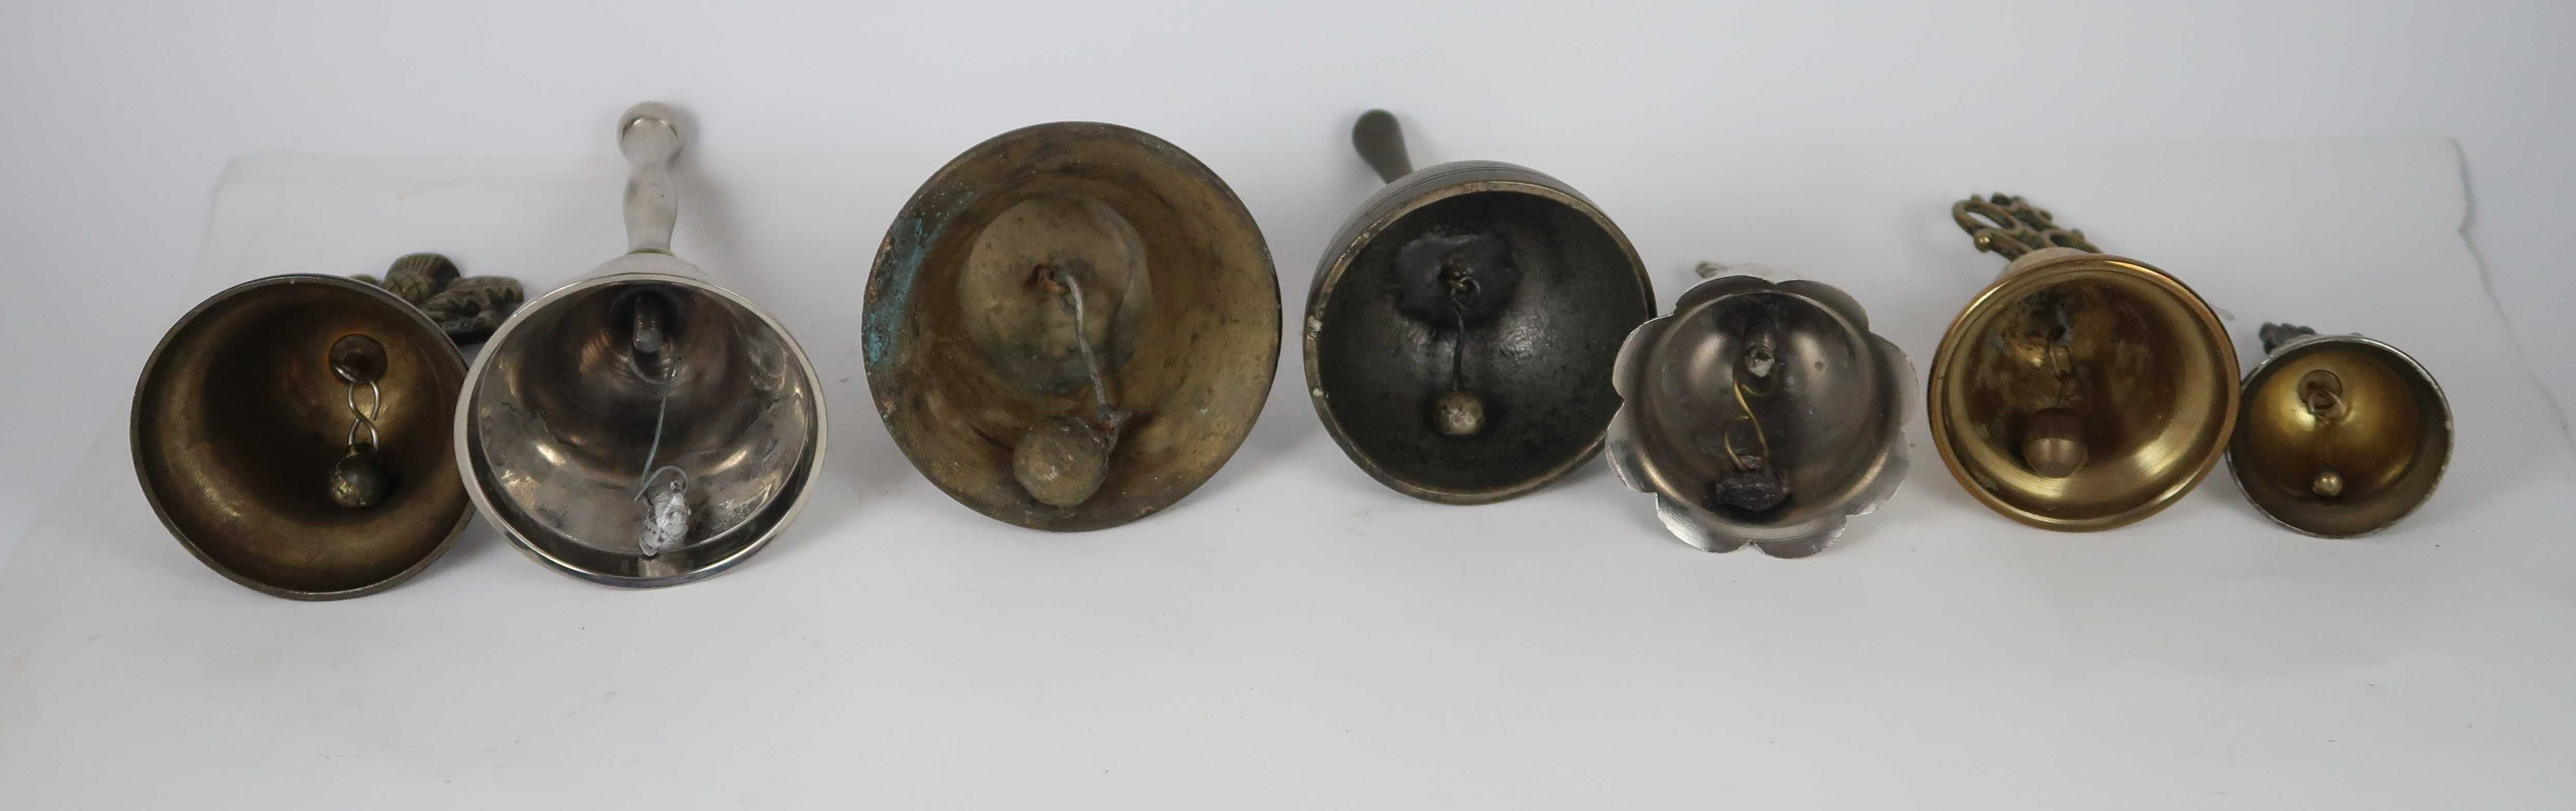 Conjunto de 7 sinetas / campainhas de mesa antigas em metal